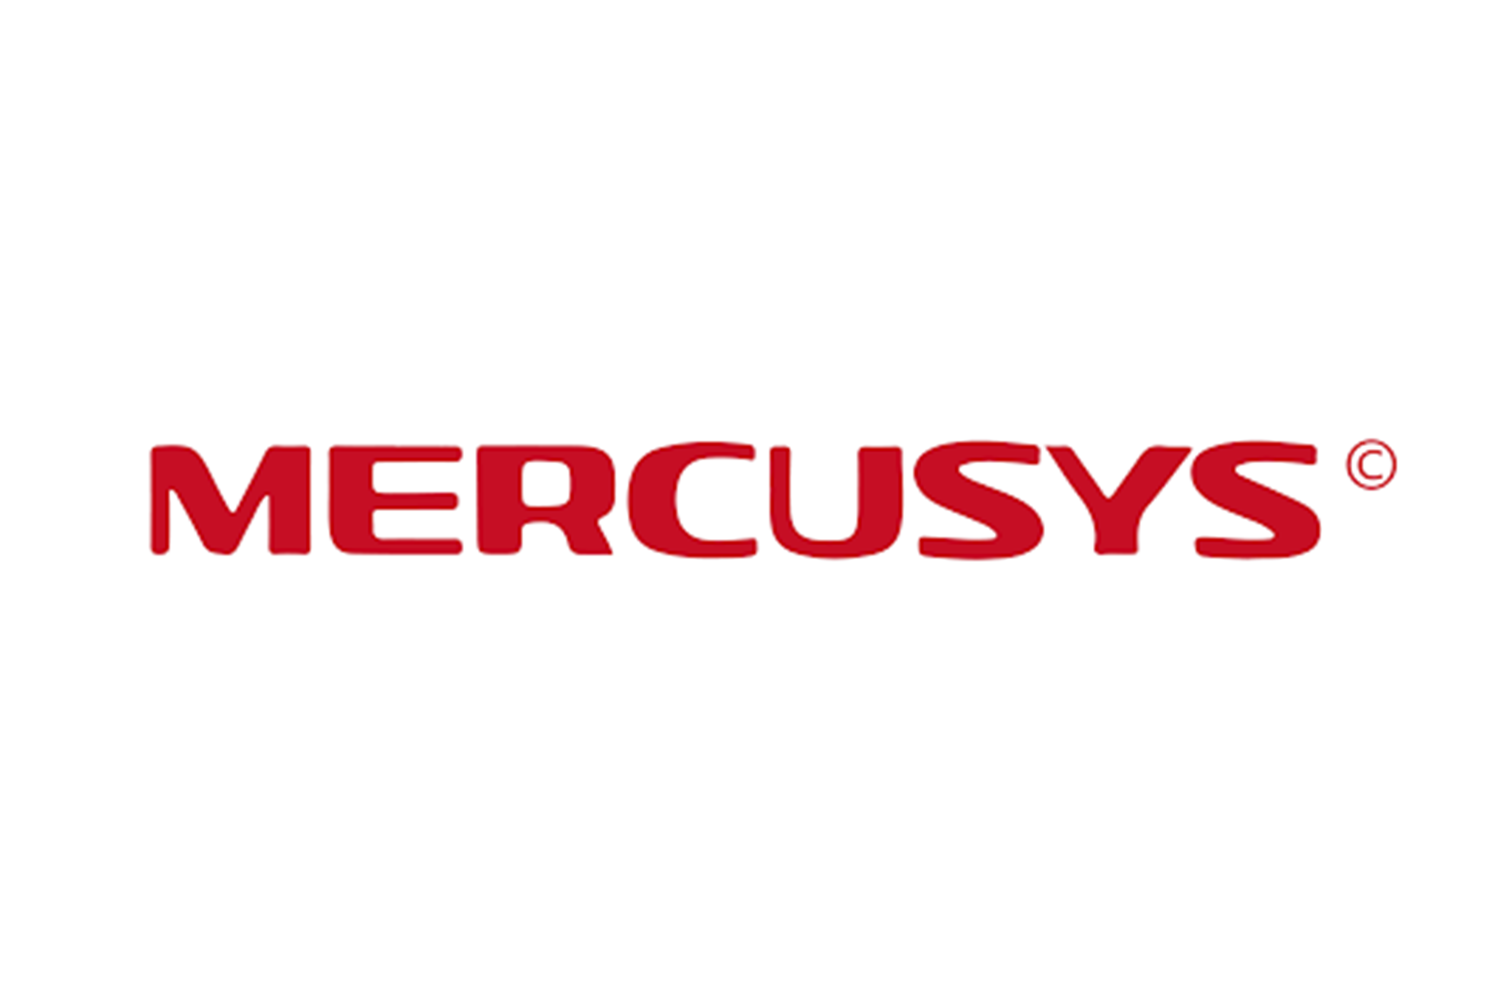 MERCUSYS MERCUSYS_logo.png